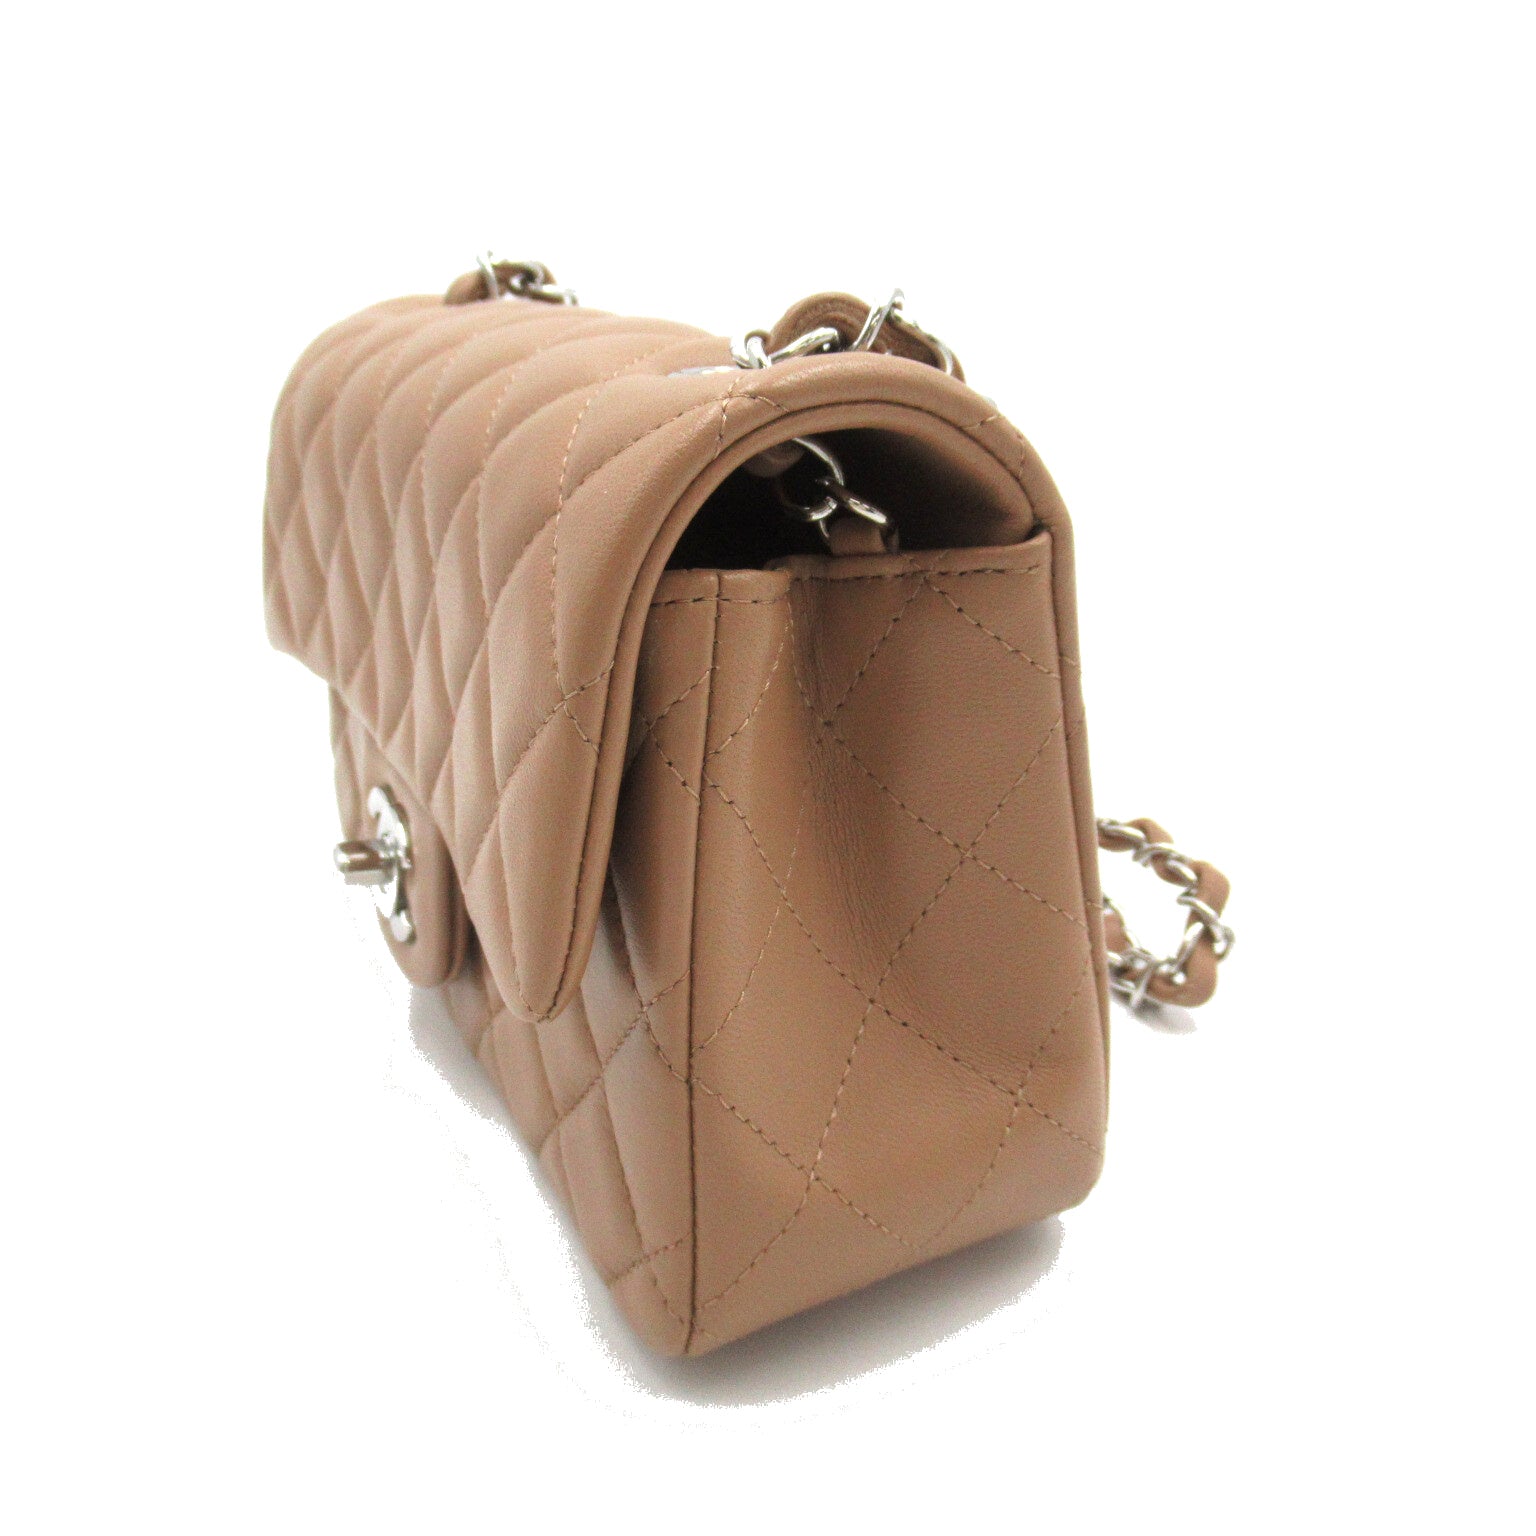 Chanel Mini Matrasse Chain Shoulder Bag A69000